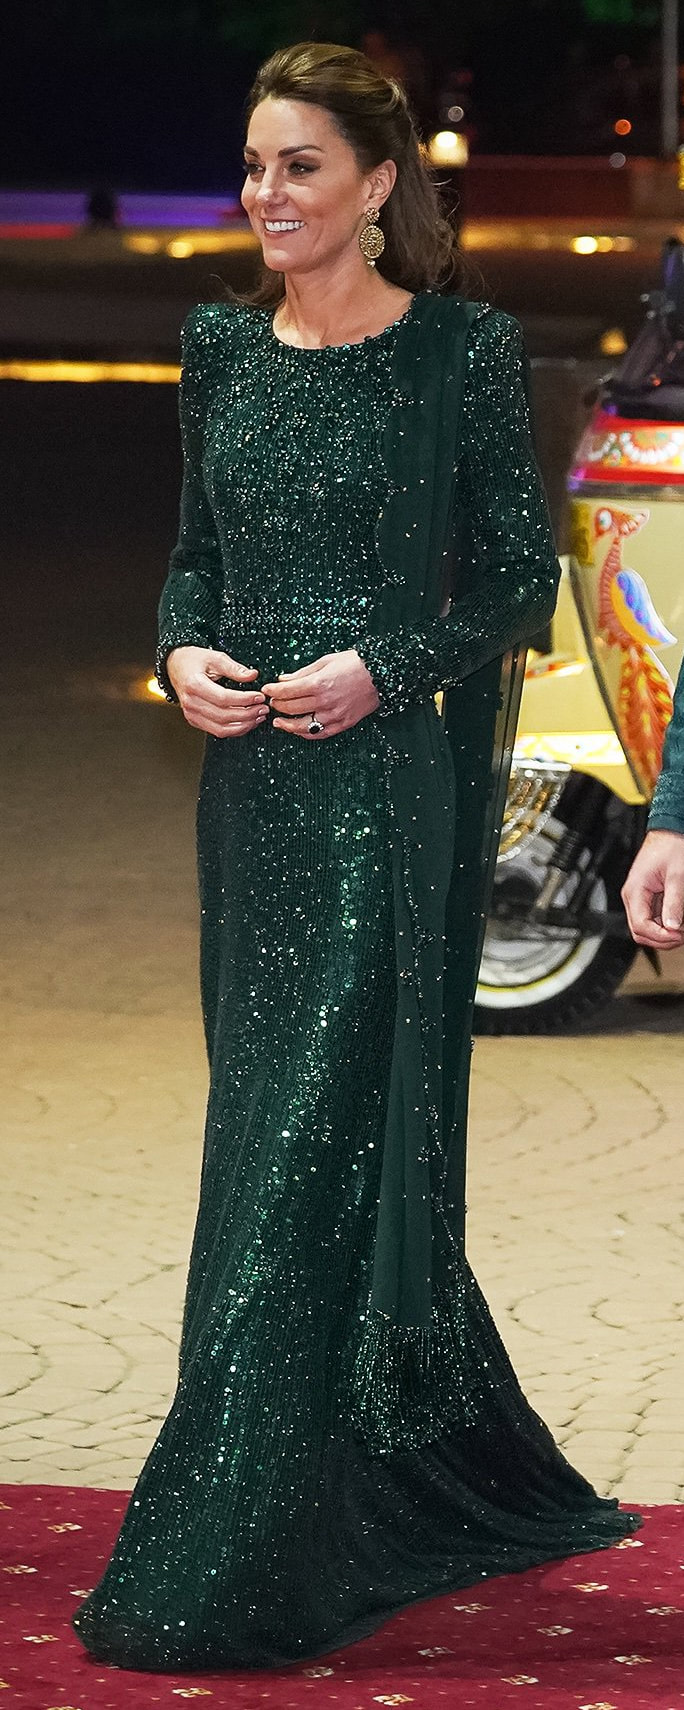 O'nitaa Crystal Drop Earrings as seen on Kate Middleton, The Duchess of Cambridge.